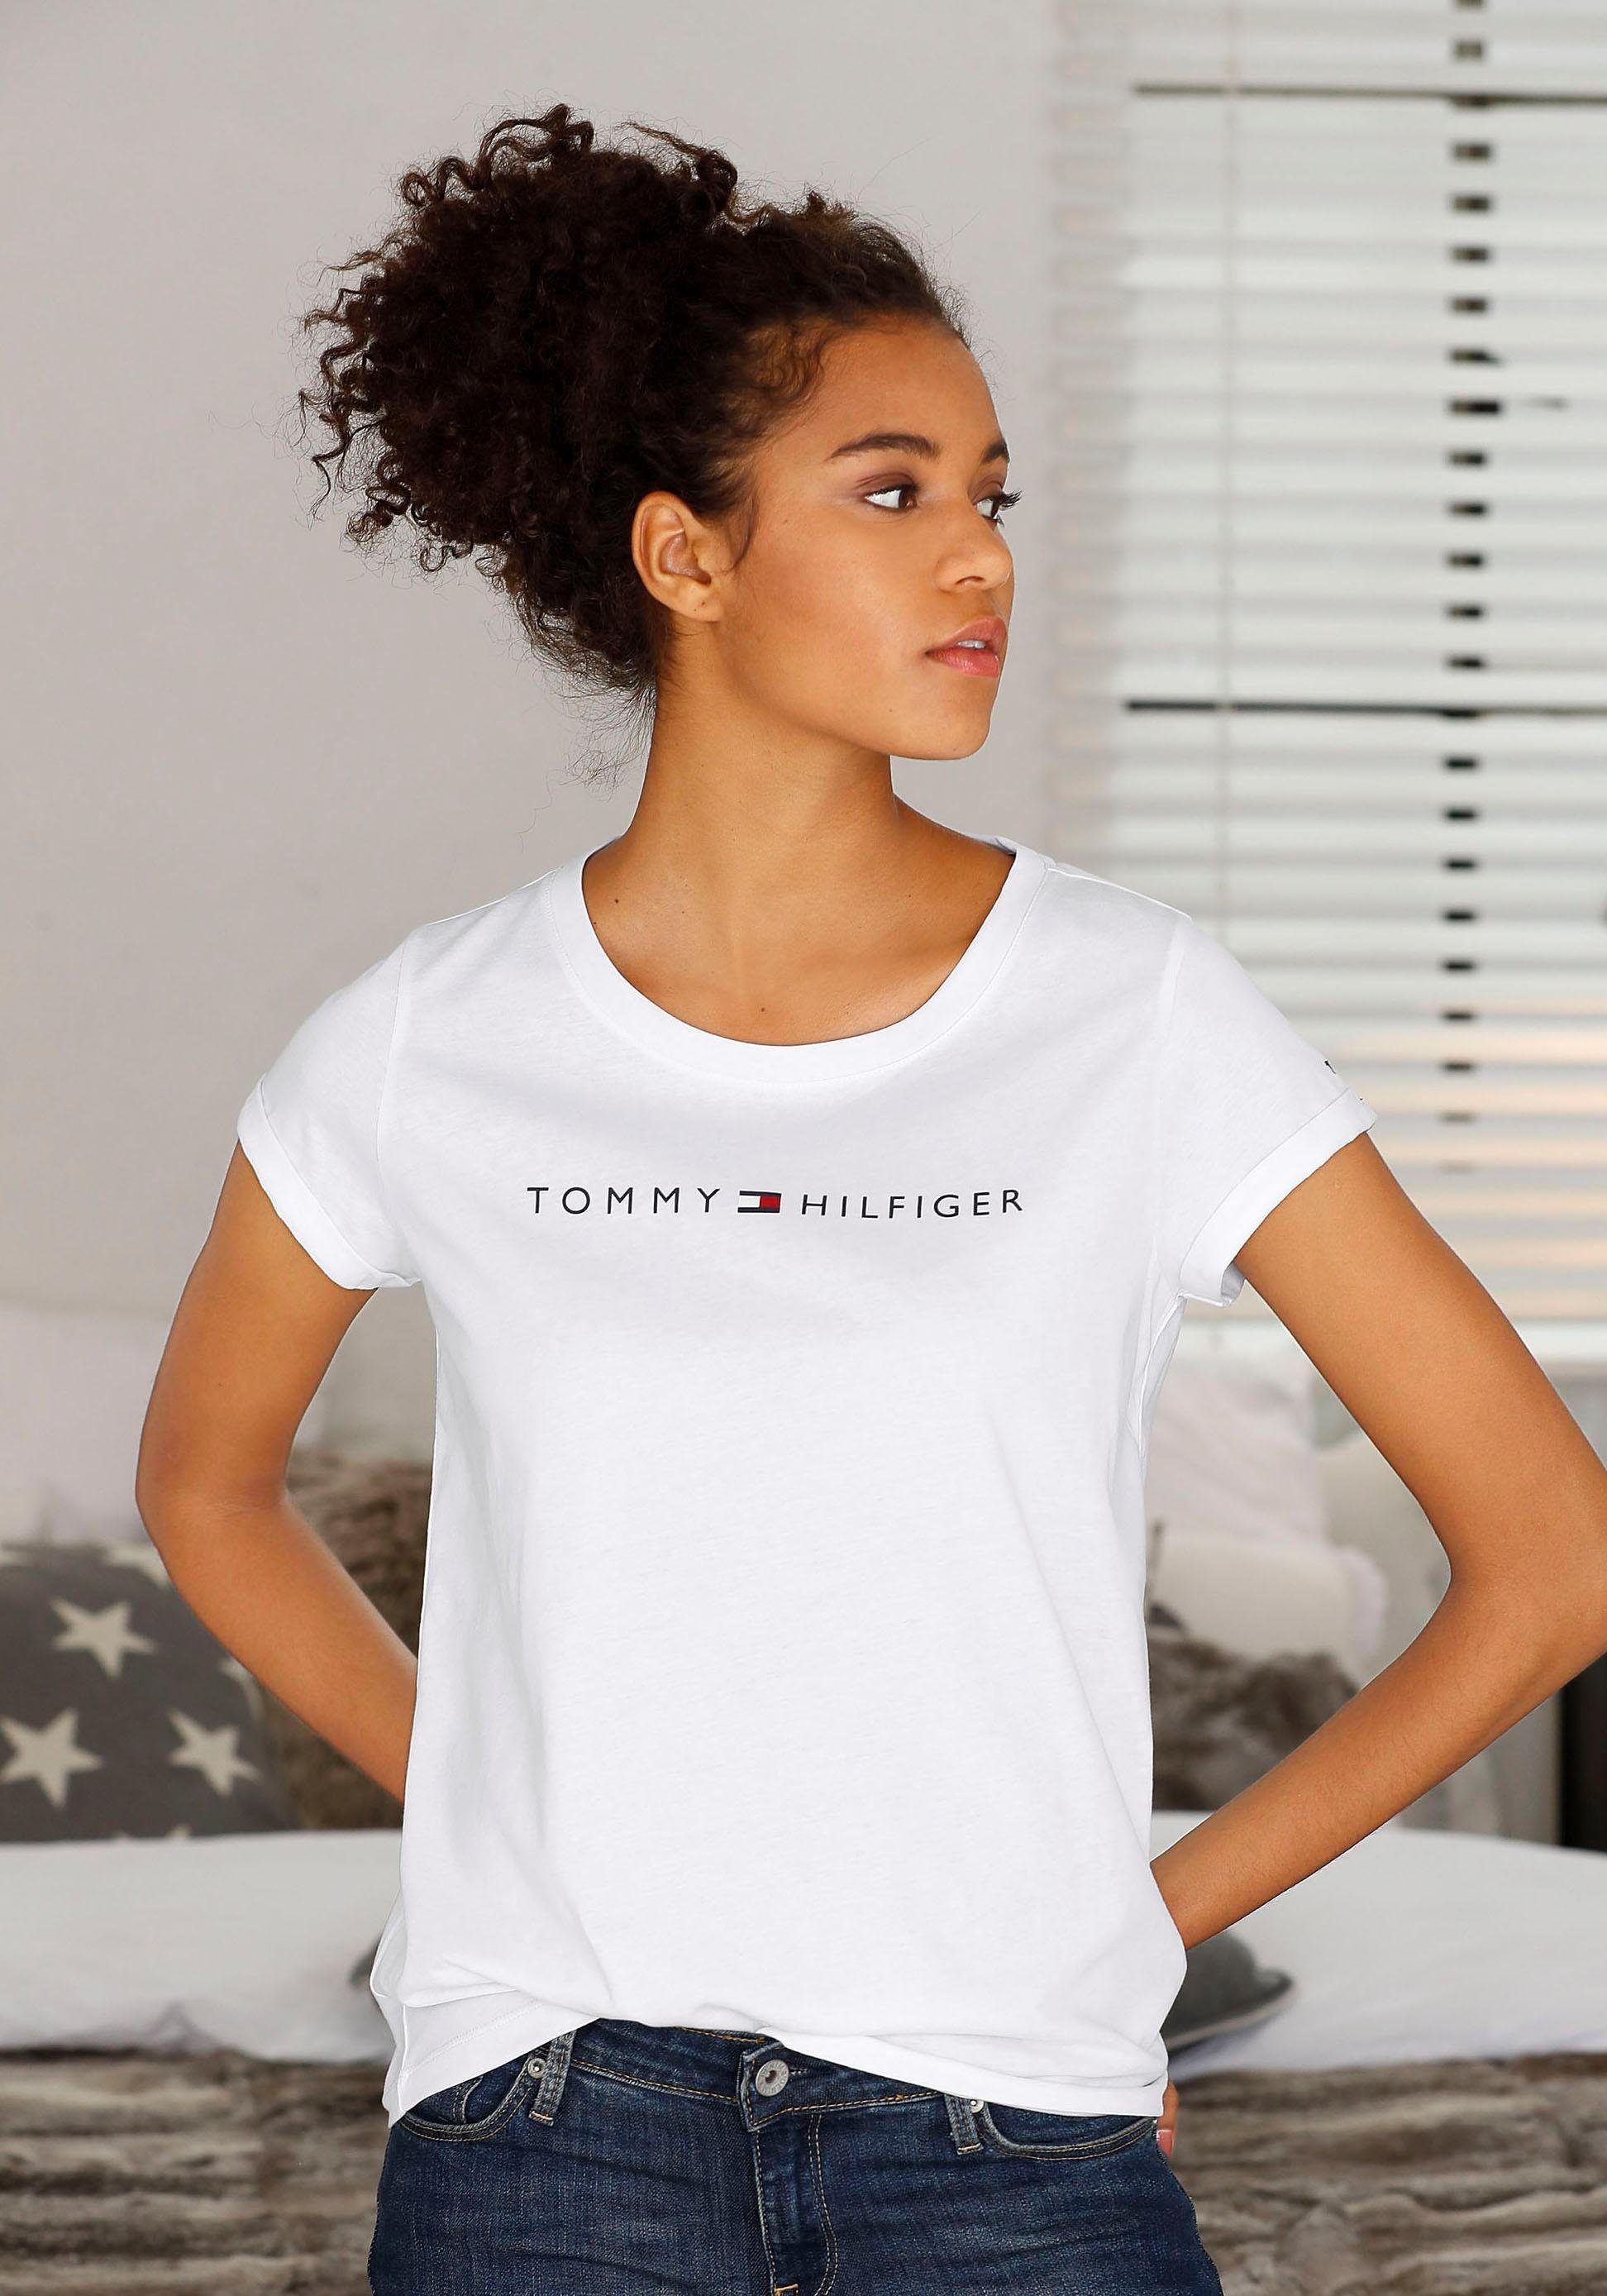 محمص طالب جامعي مائي tommy hilfiger shirts online - scottygmaster.com